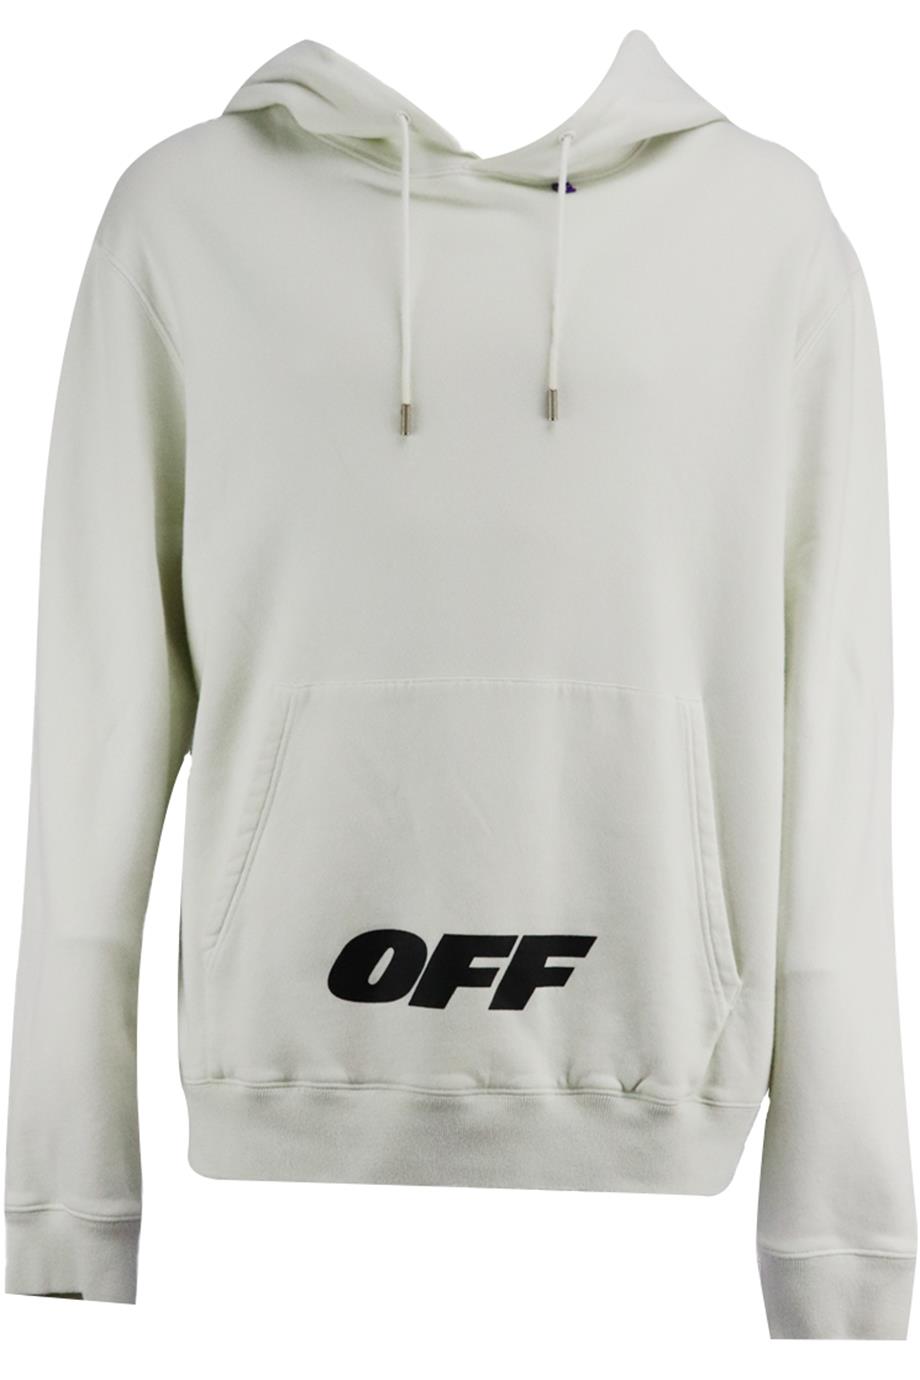 Off-White C/O Virgil Abloh hoodie 100% original!